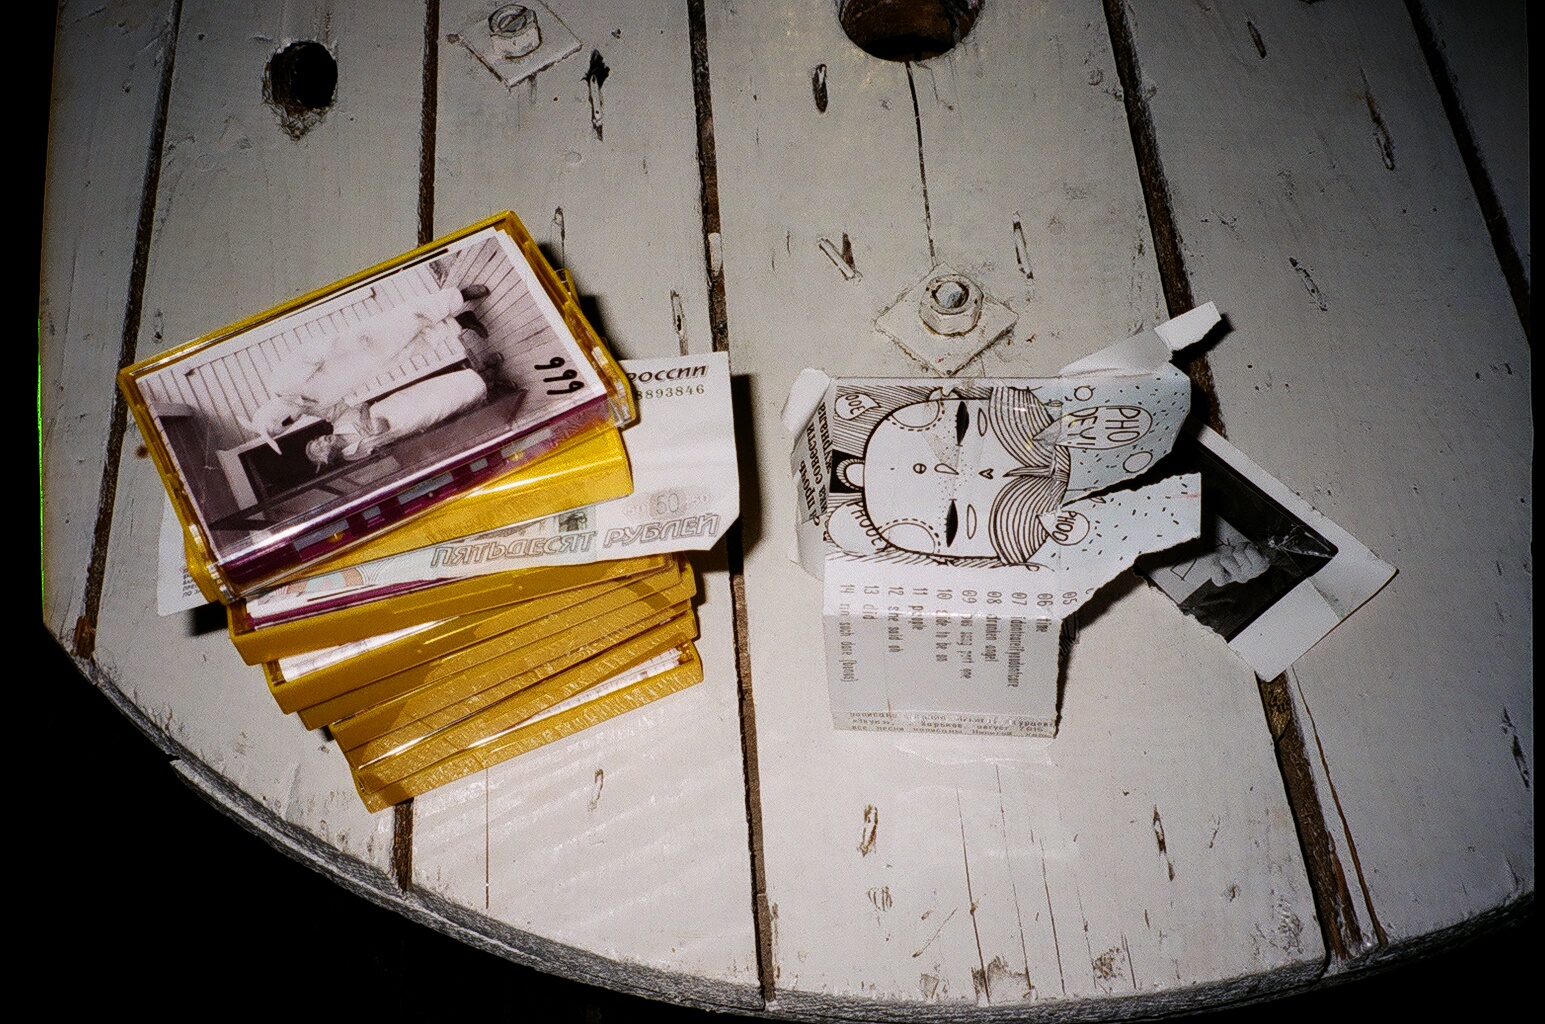 Cassettes on display at Garage Karma Store. Image: Sasha Raspopina